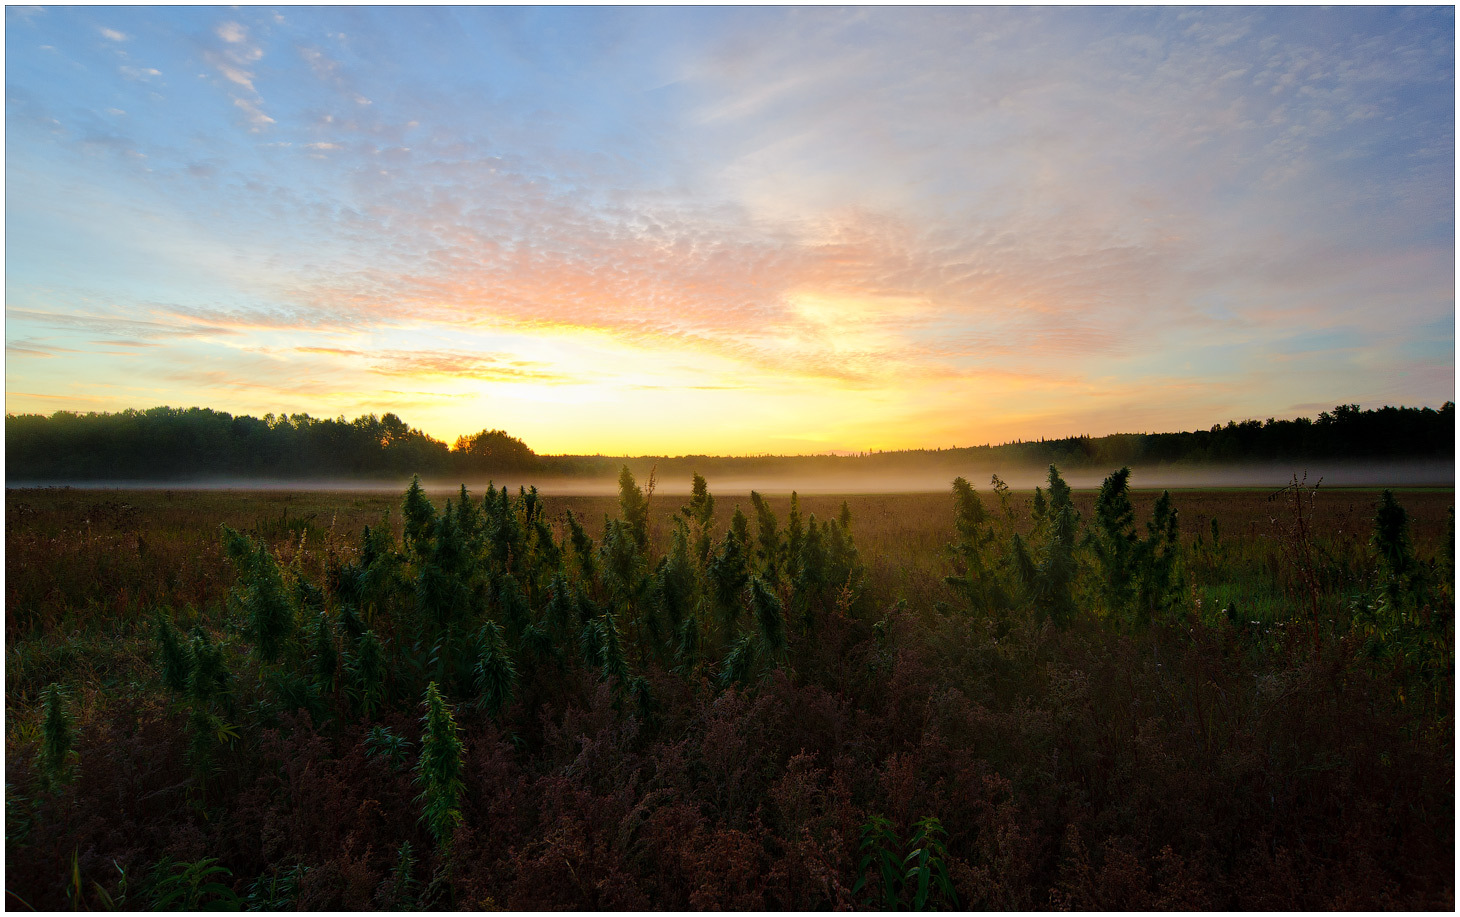 Landscape, at dawn | landscape, morning, fog, sky, dawn, forest, skyline, grass, light, field